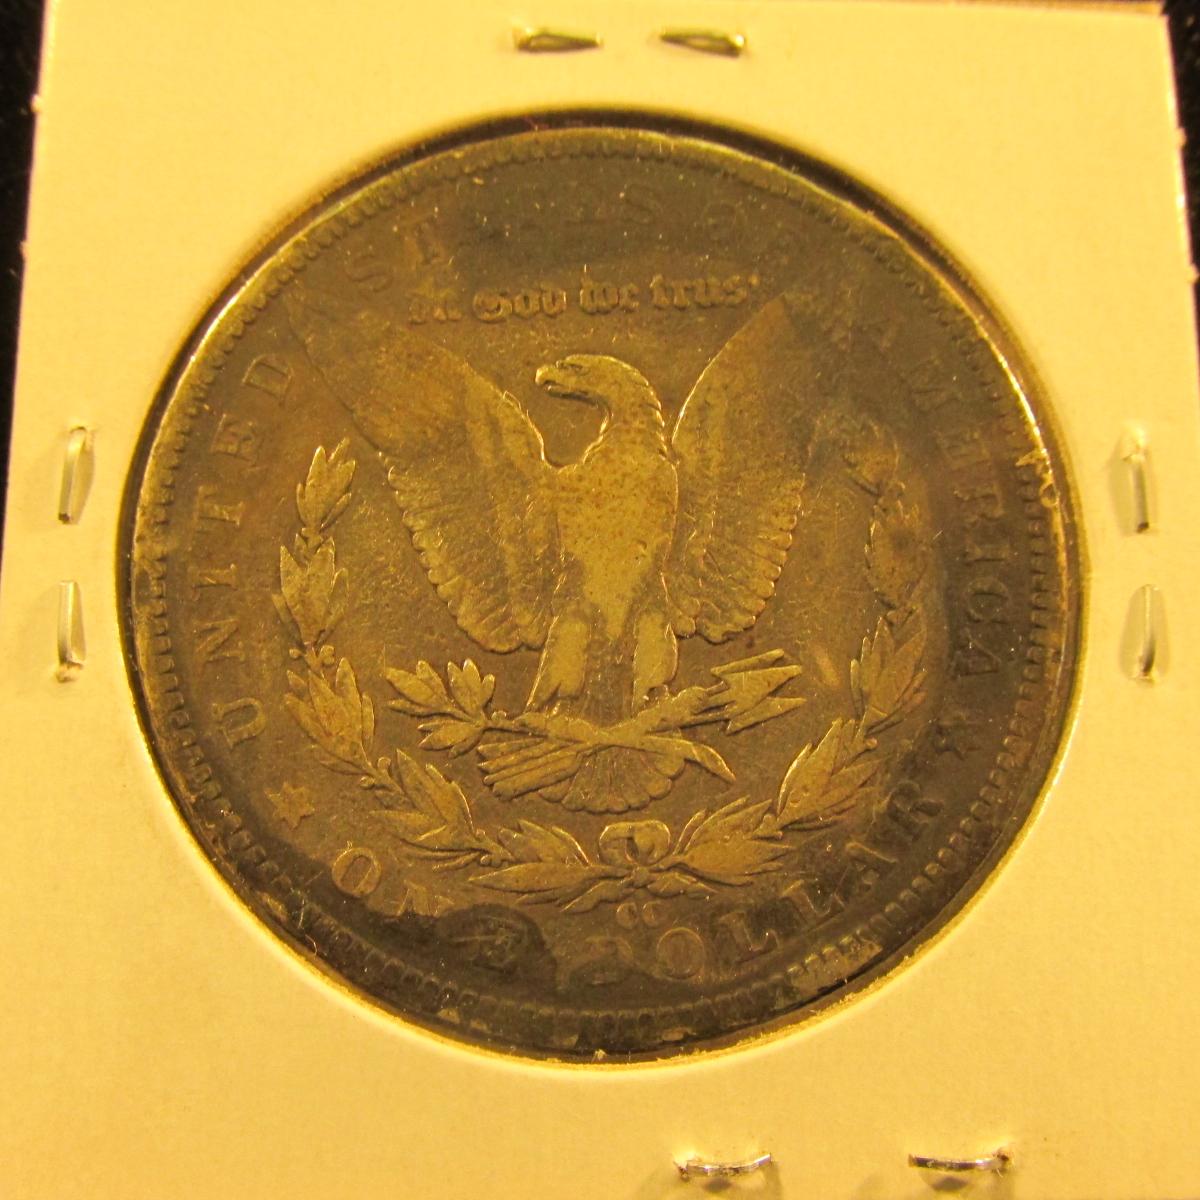 1666 . 1891 CC Morgan Silver Dollar